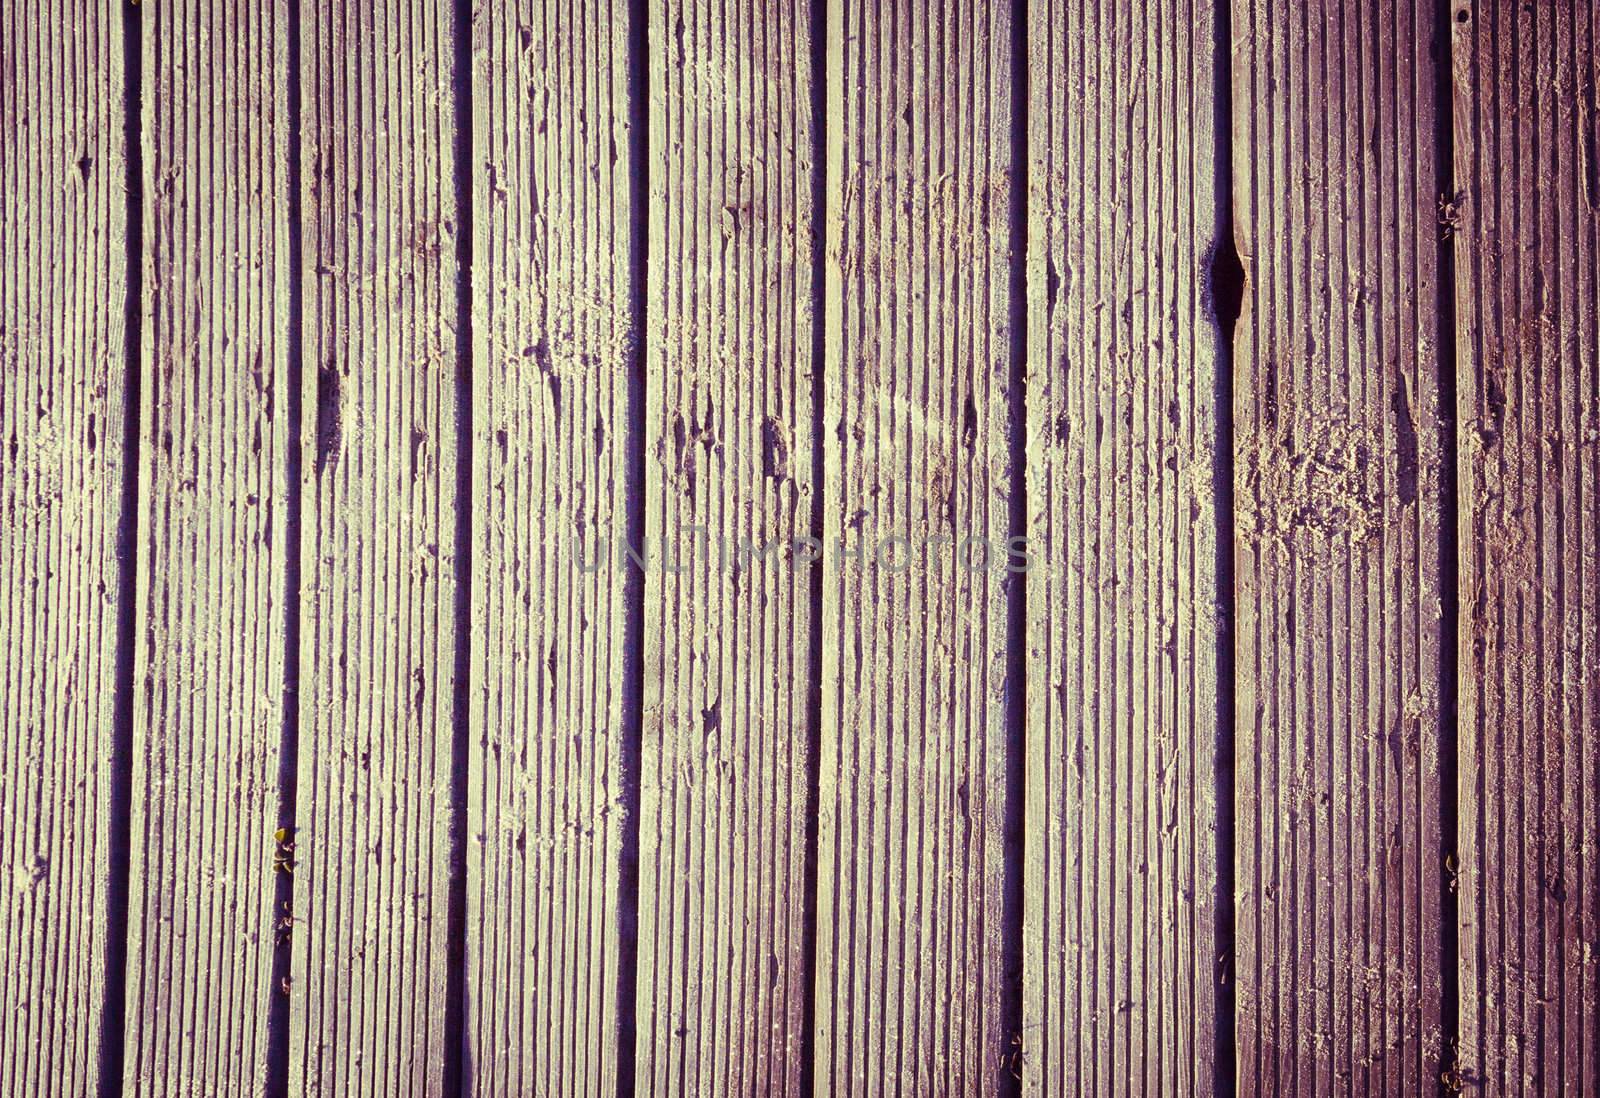 Natural wood planks vintage texture background